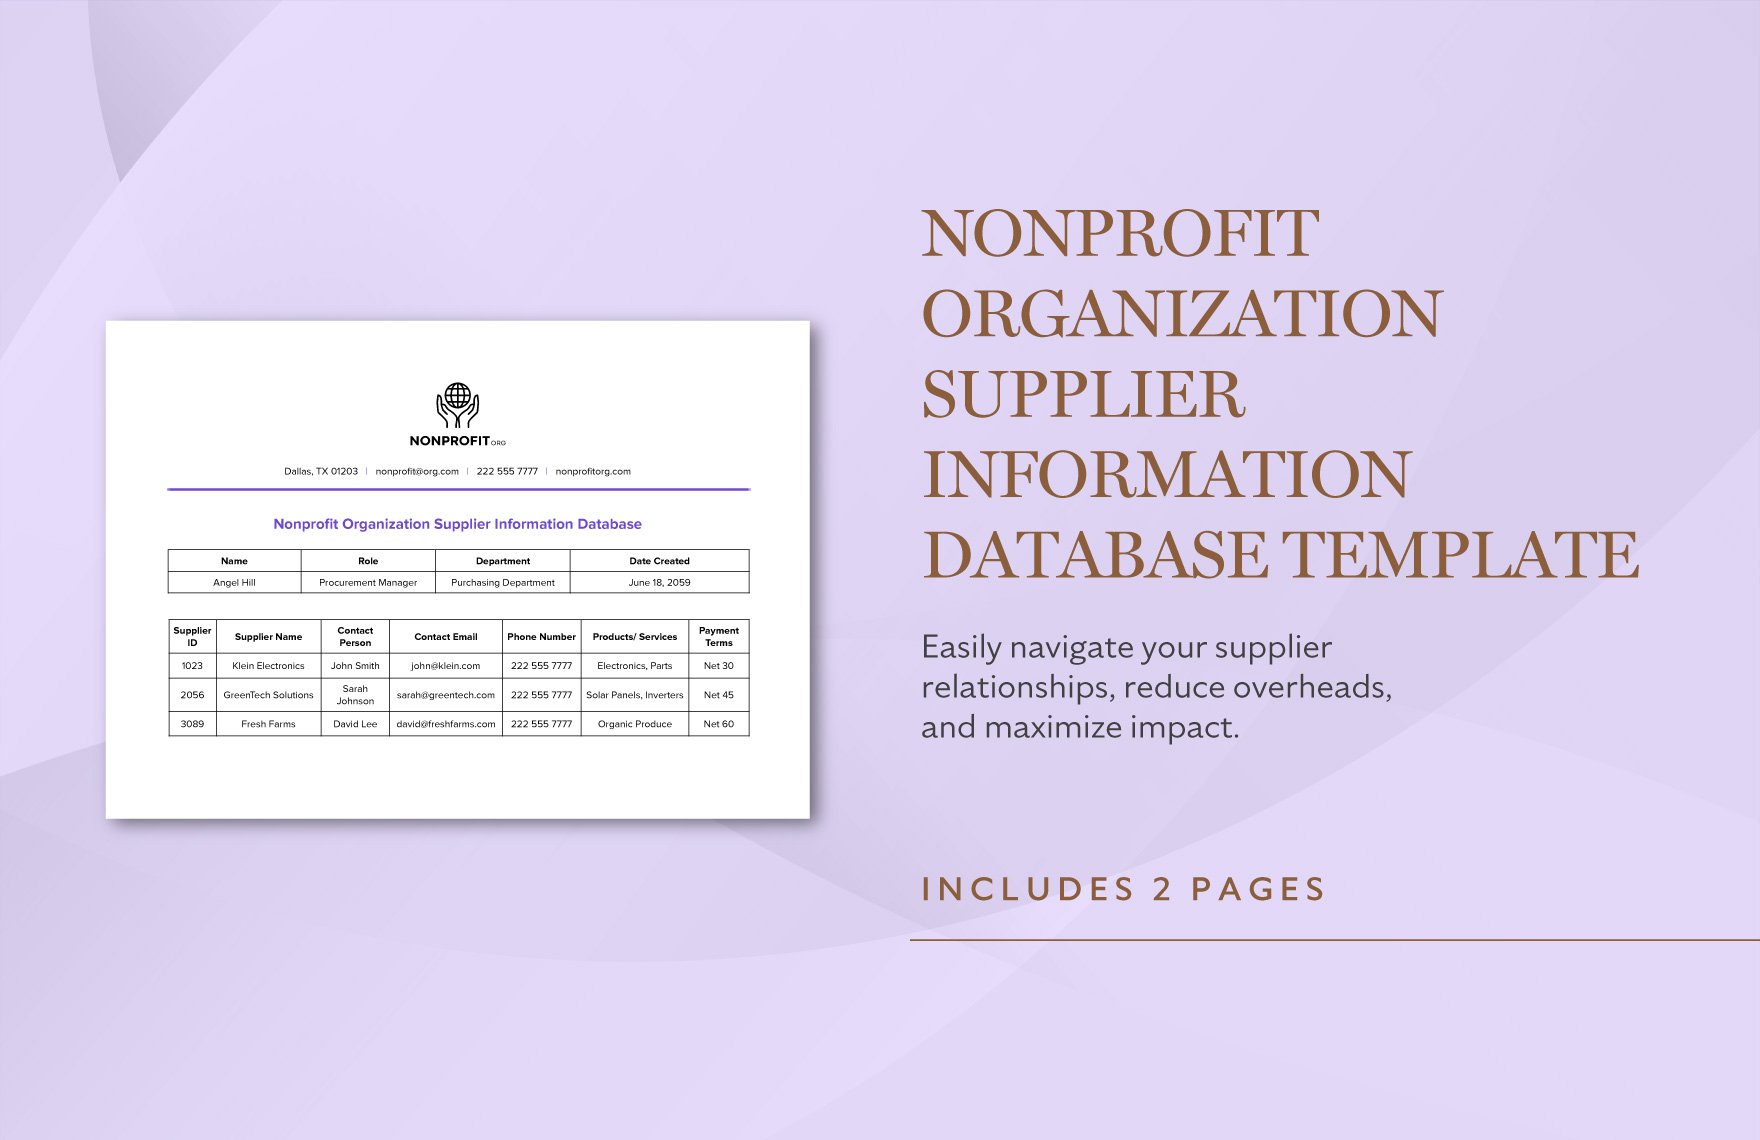 Nonprofit Organization Supplier Information Database Template in Word, Google Docs, PDF